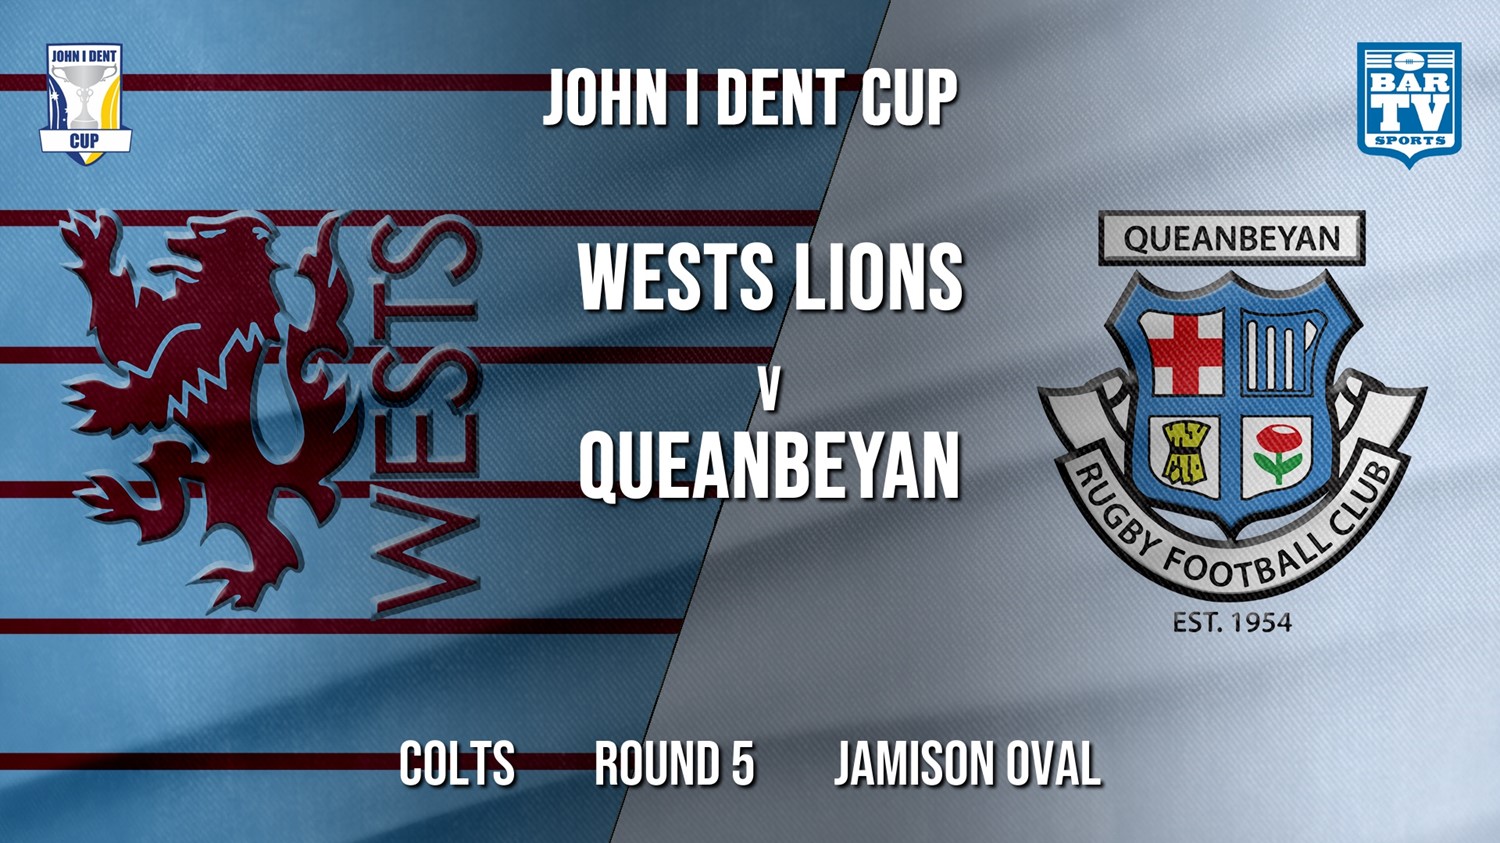 John I Dent Round 5 - Colts - Wests Lions v Queanbeyan Whites Minigame Slate Image